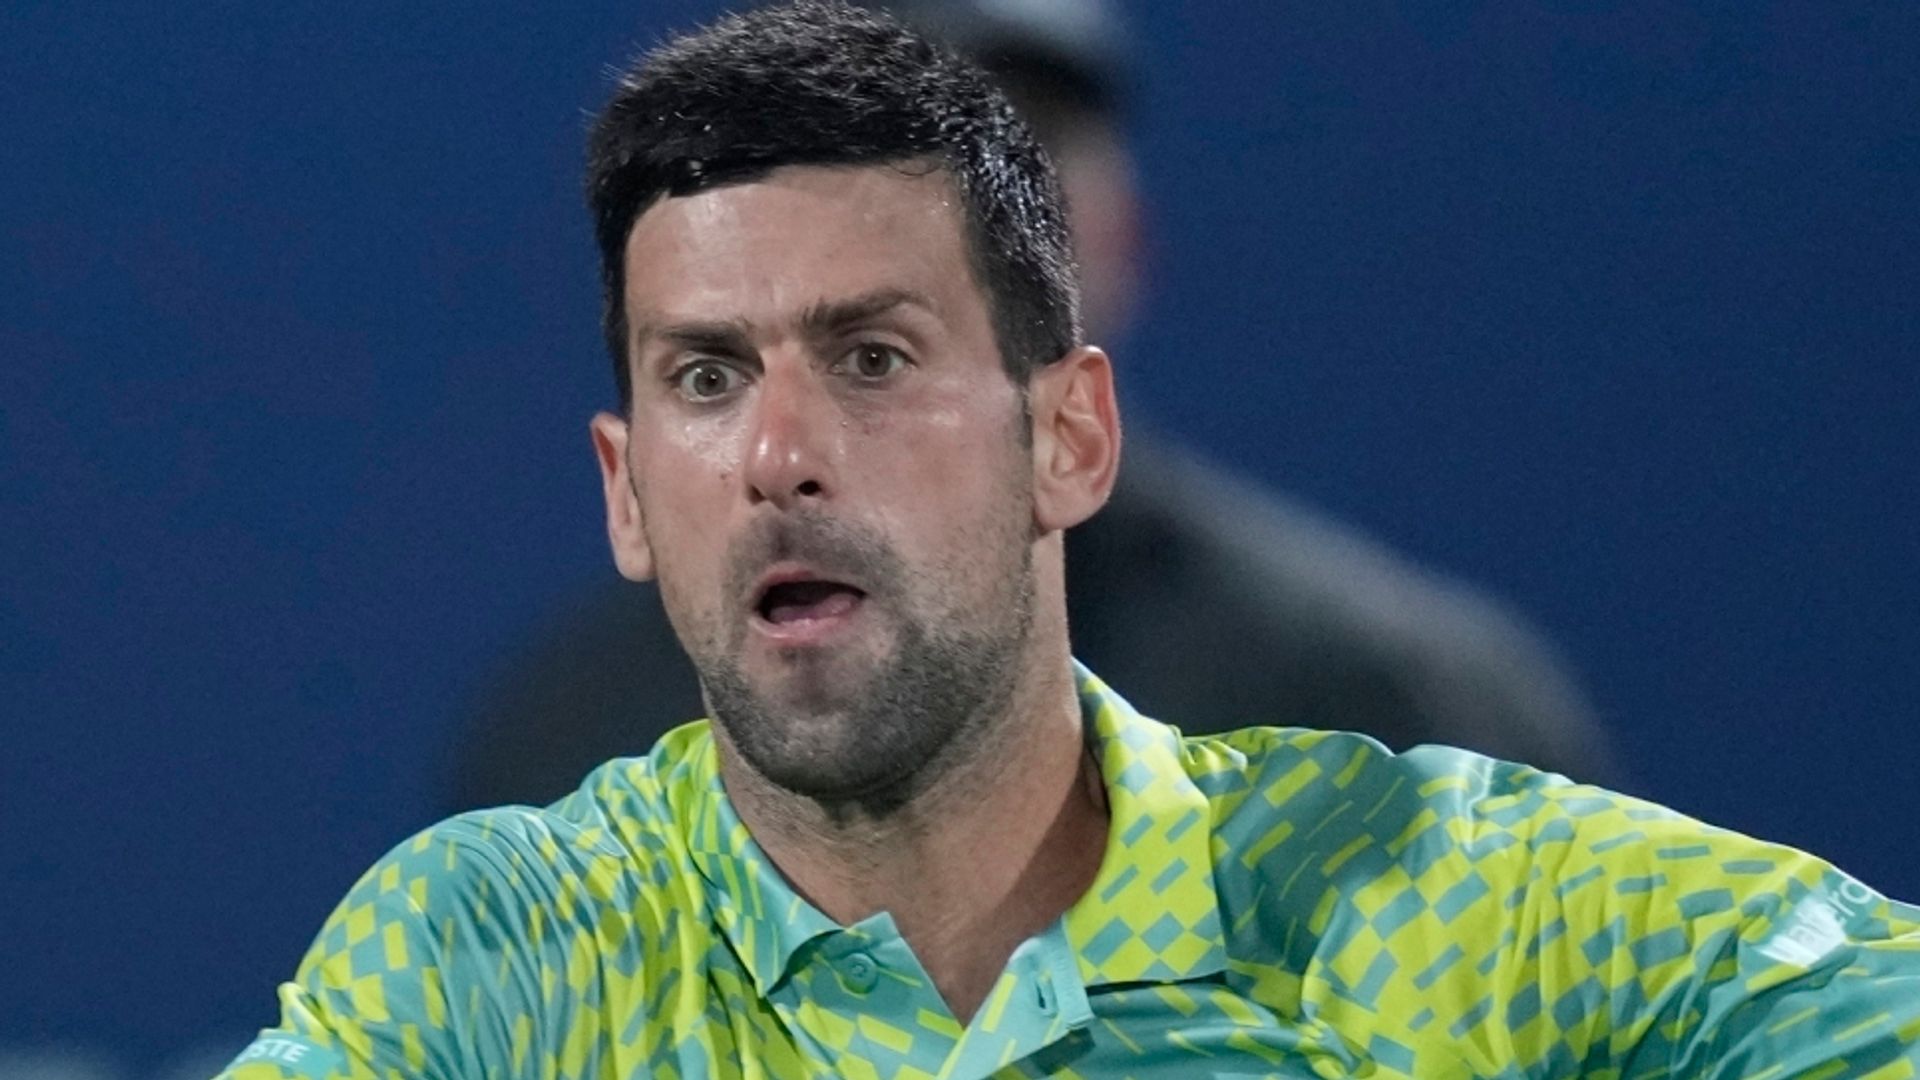 Djokovic sees winning streak ended by Medvedev in Dubai